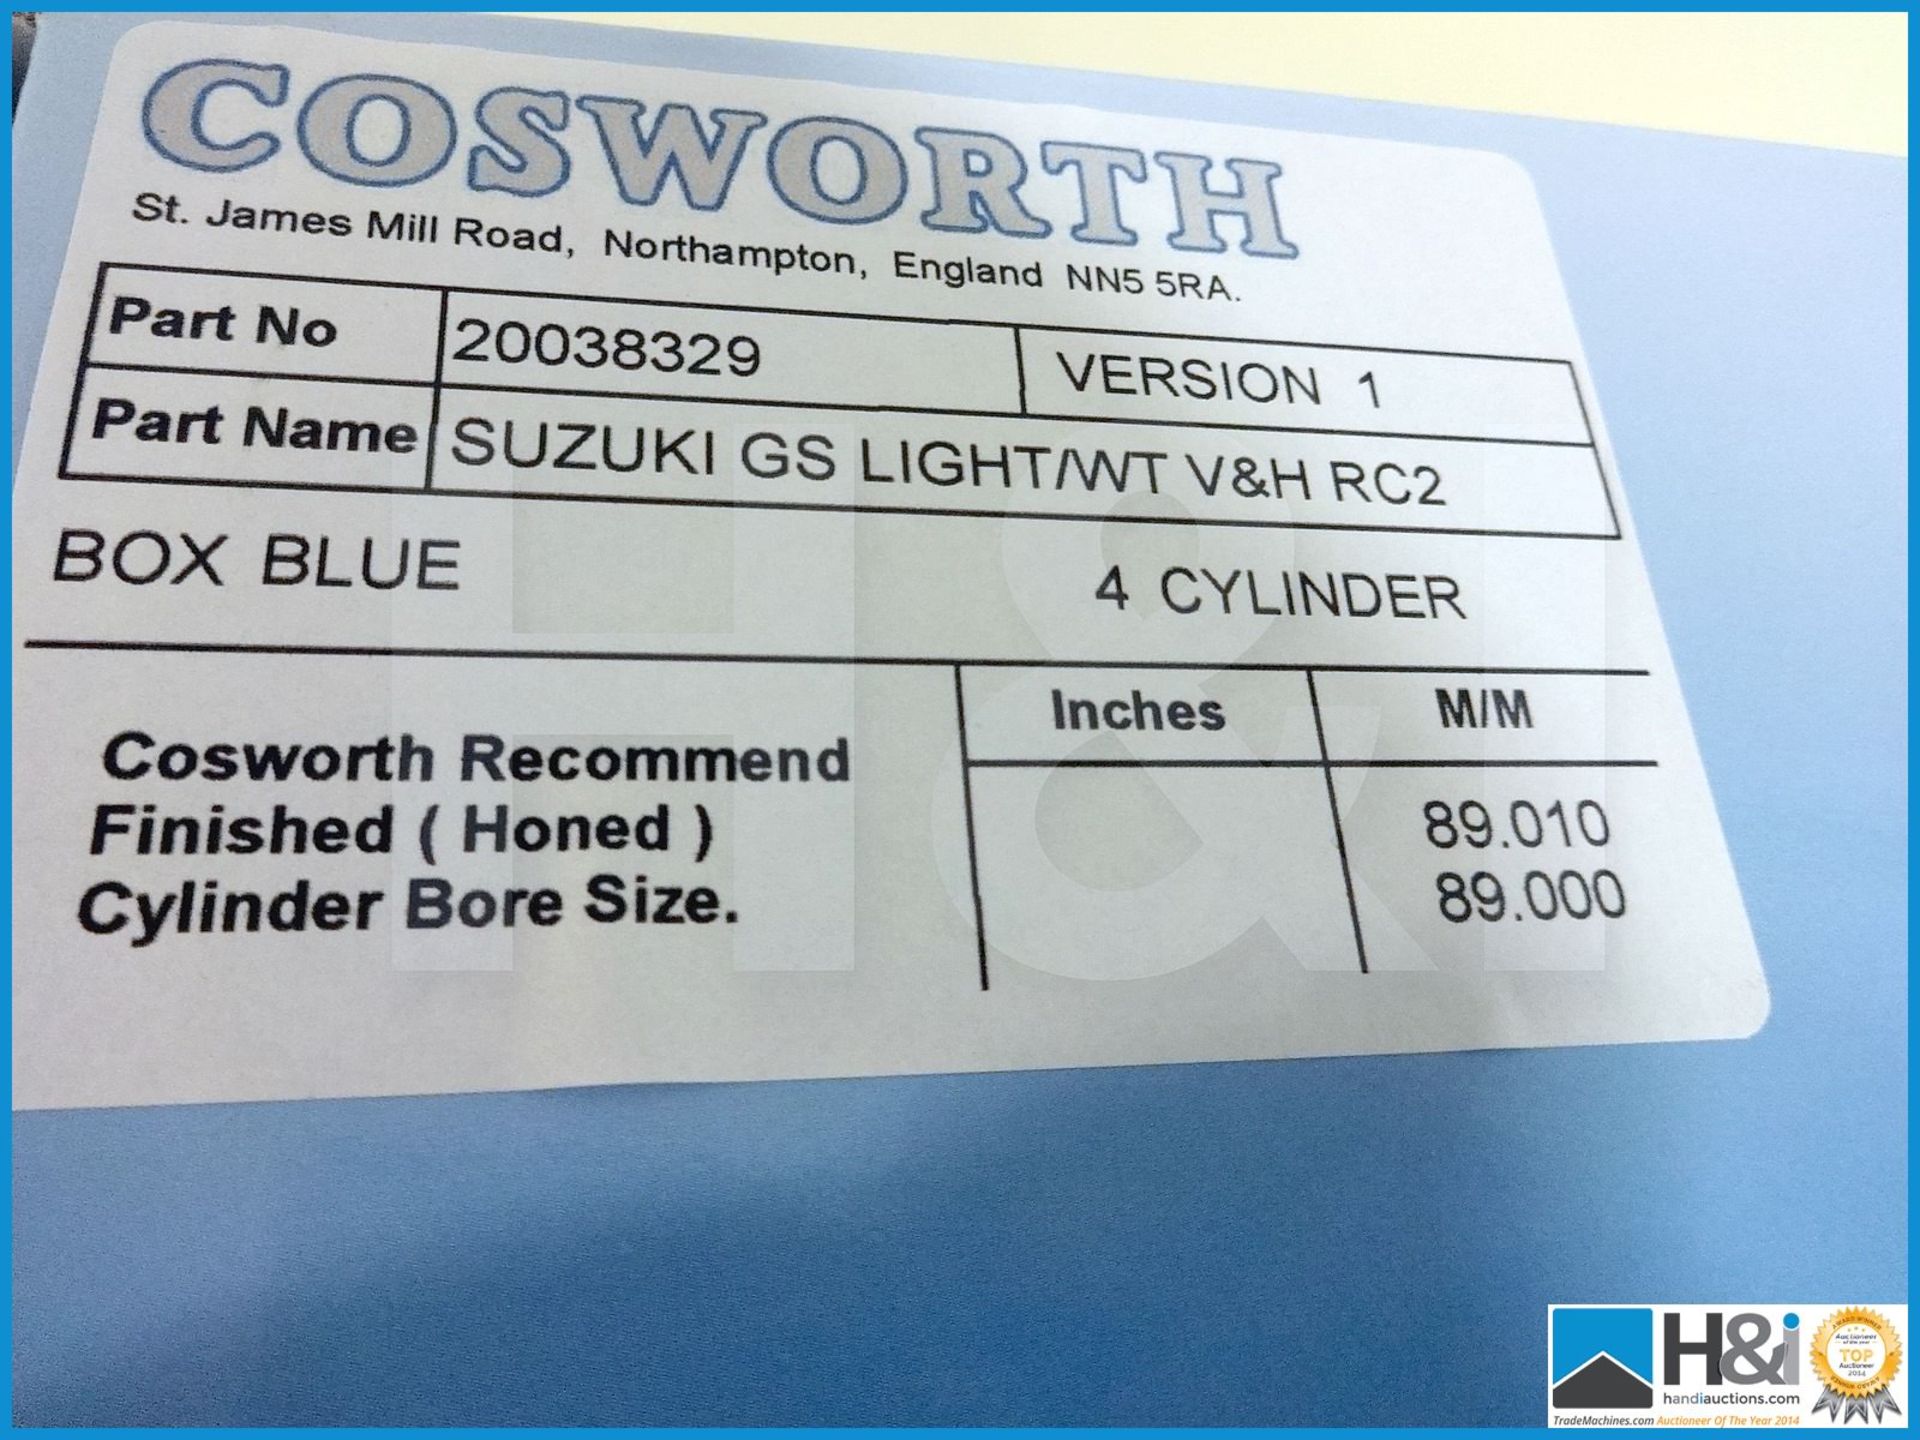 1 off Suzuki GS light weight V&H RC2 piston. Brand new and unused. MC: 20038329 CILN: 123 - Image 3 of 3